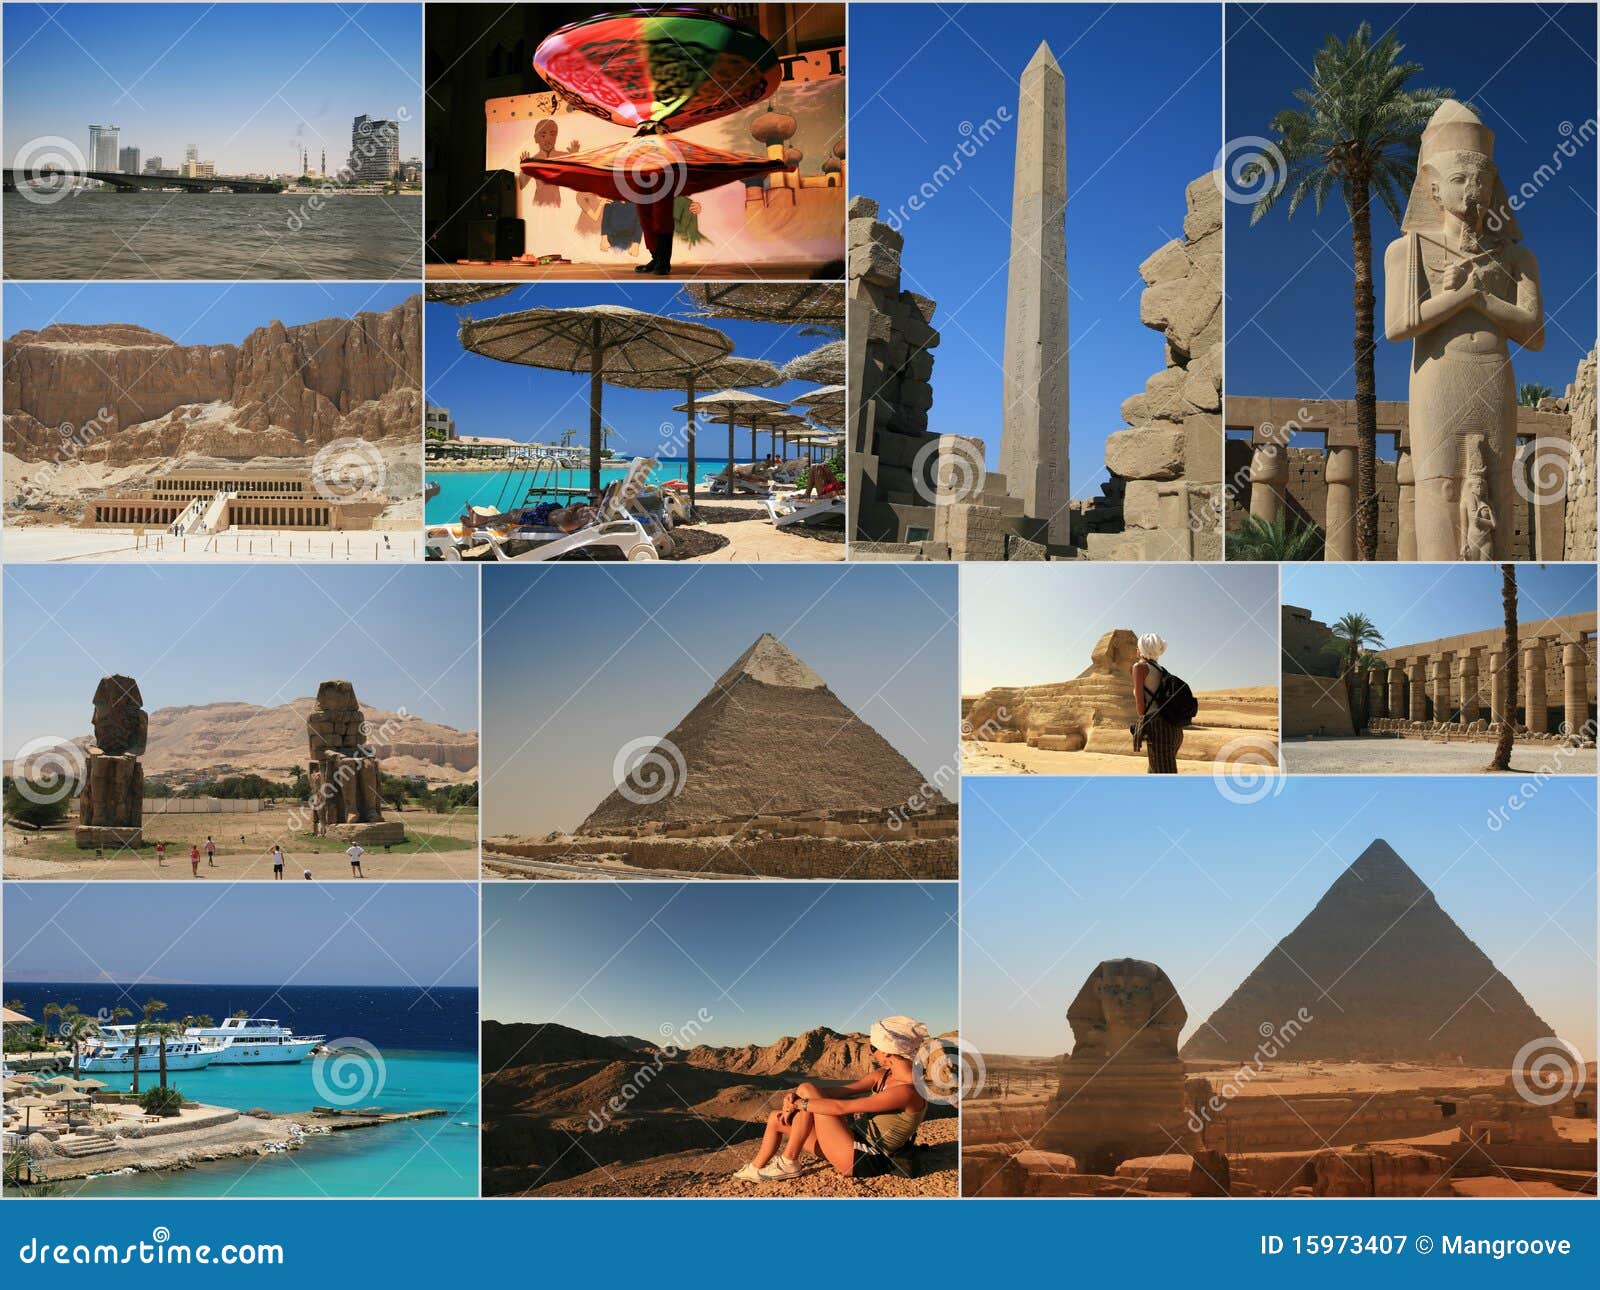 egypt collage